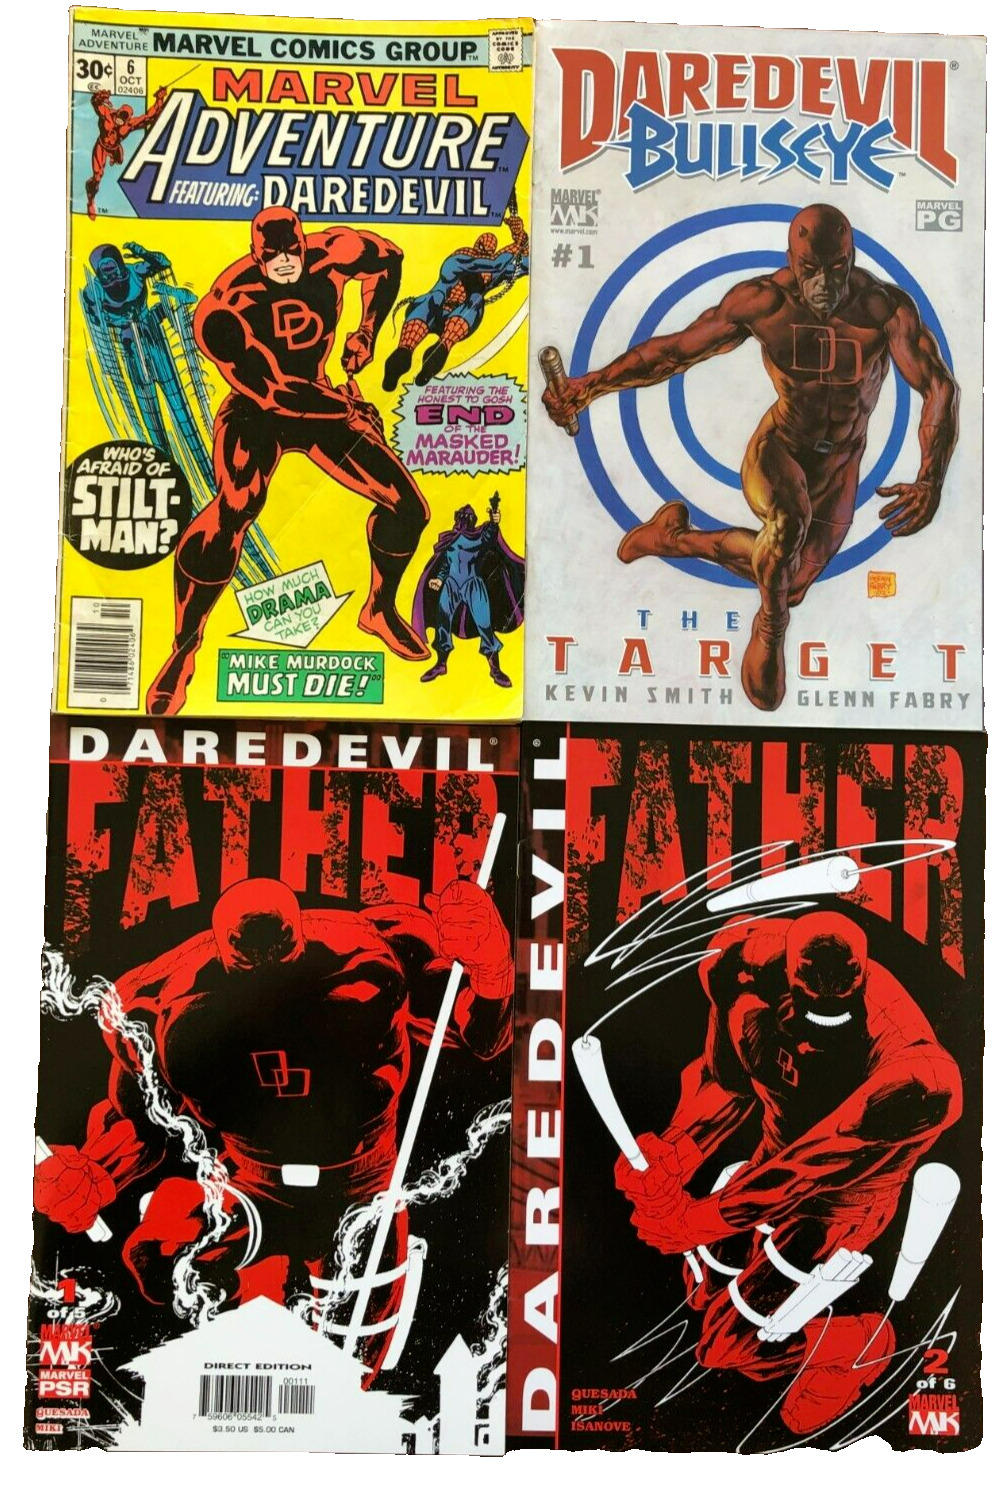 Lot of 4 Marvel Comics DAREDEVIL Bundle Including Vintage Comic Book Used Father